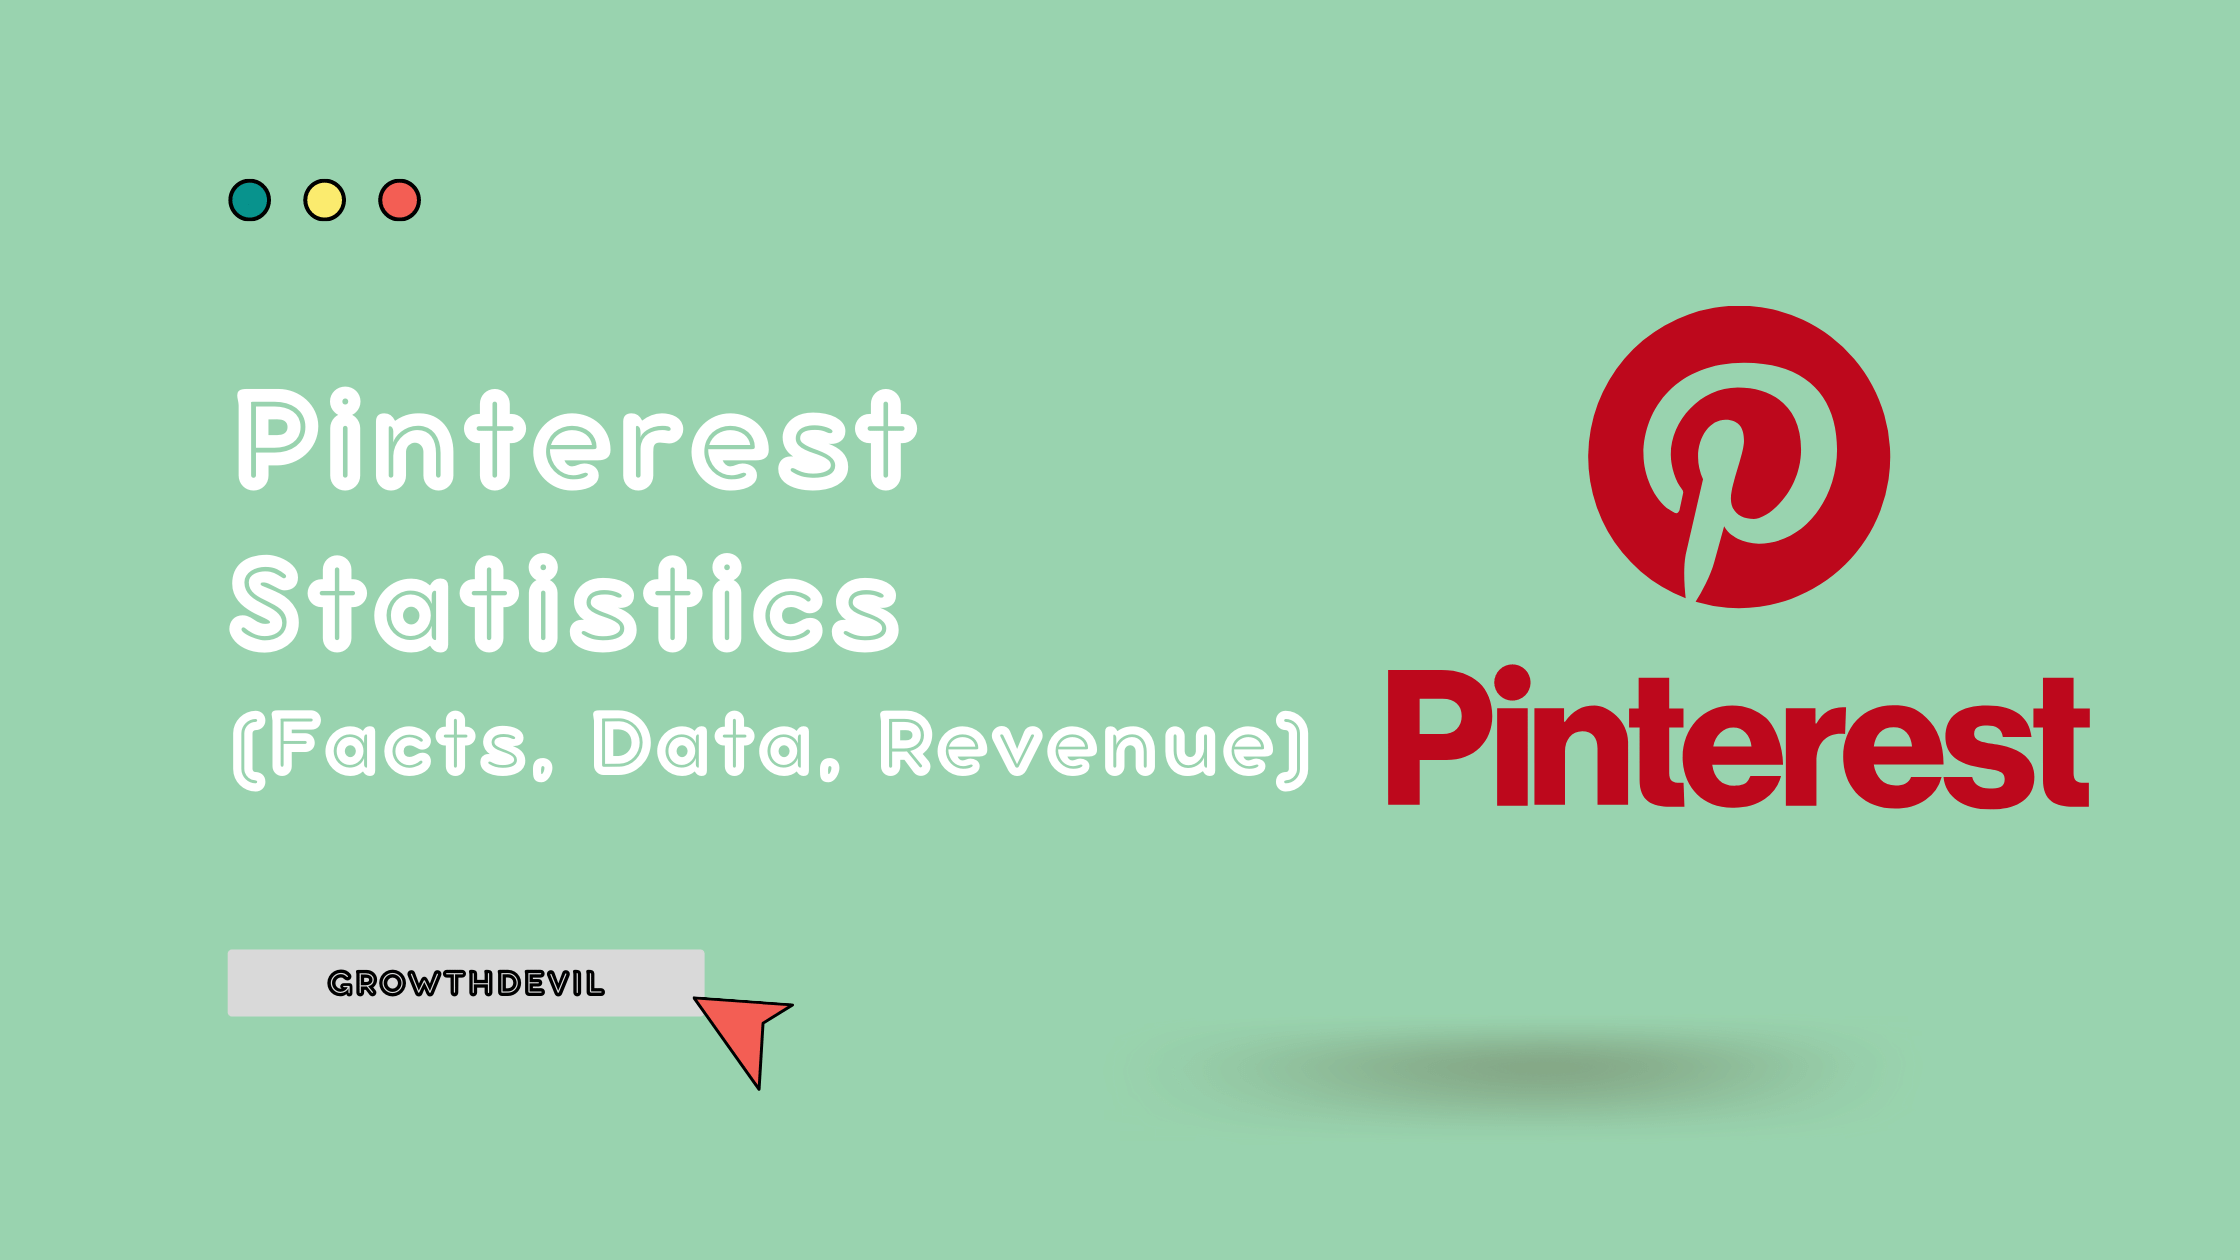 Pinterest Statistics - GrowthDevil